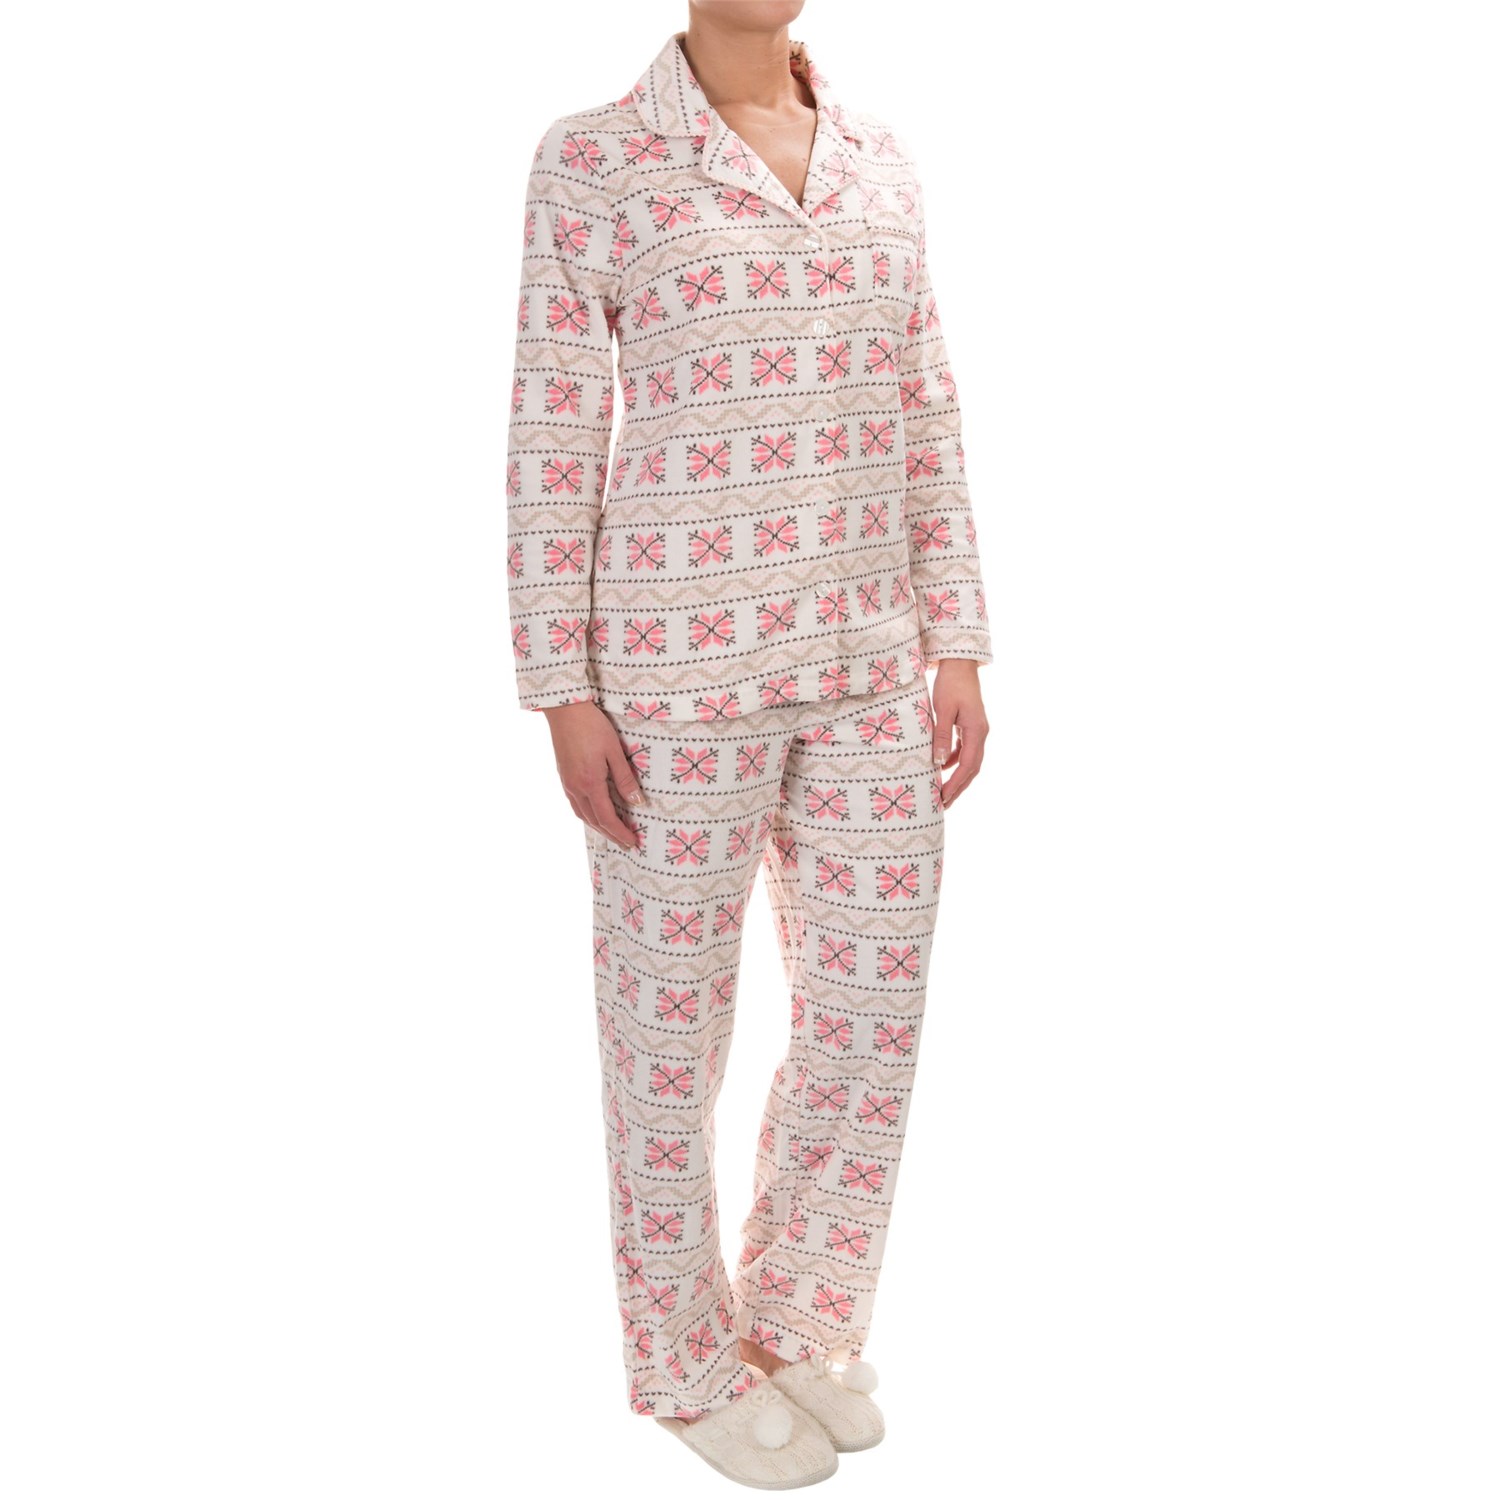 Company Ellen Tracy Classic Microfleece Pajamas (For Women) - Save 65%